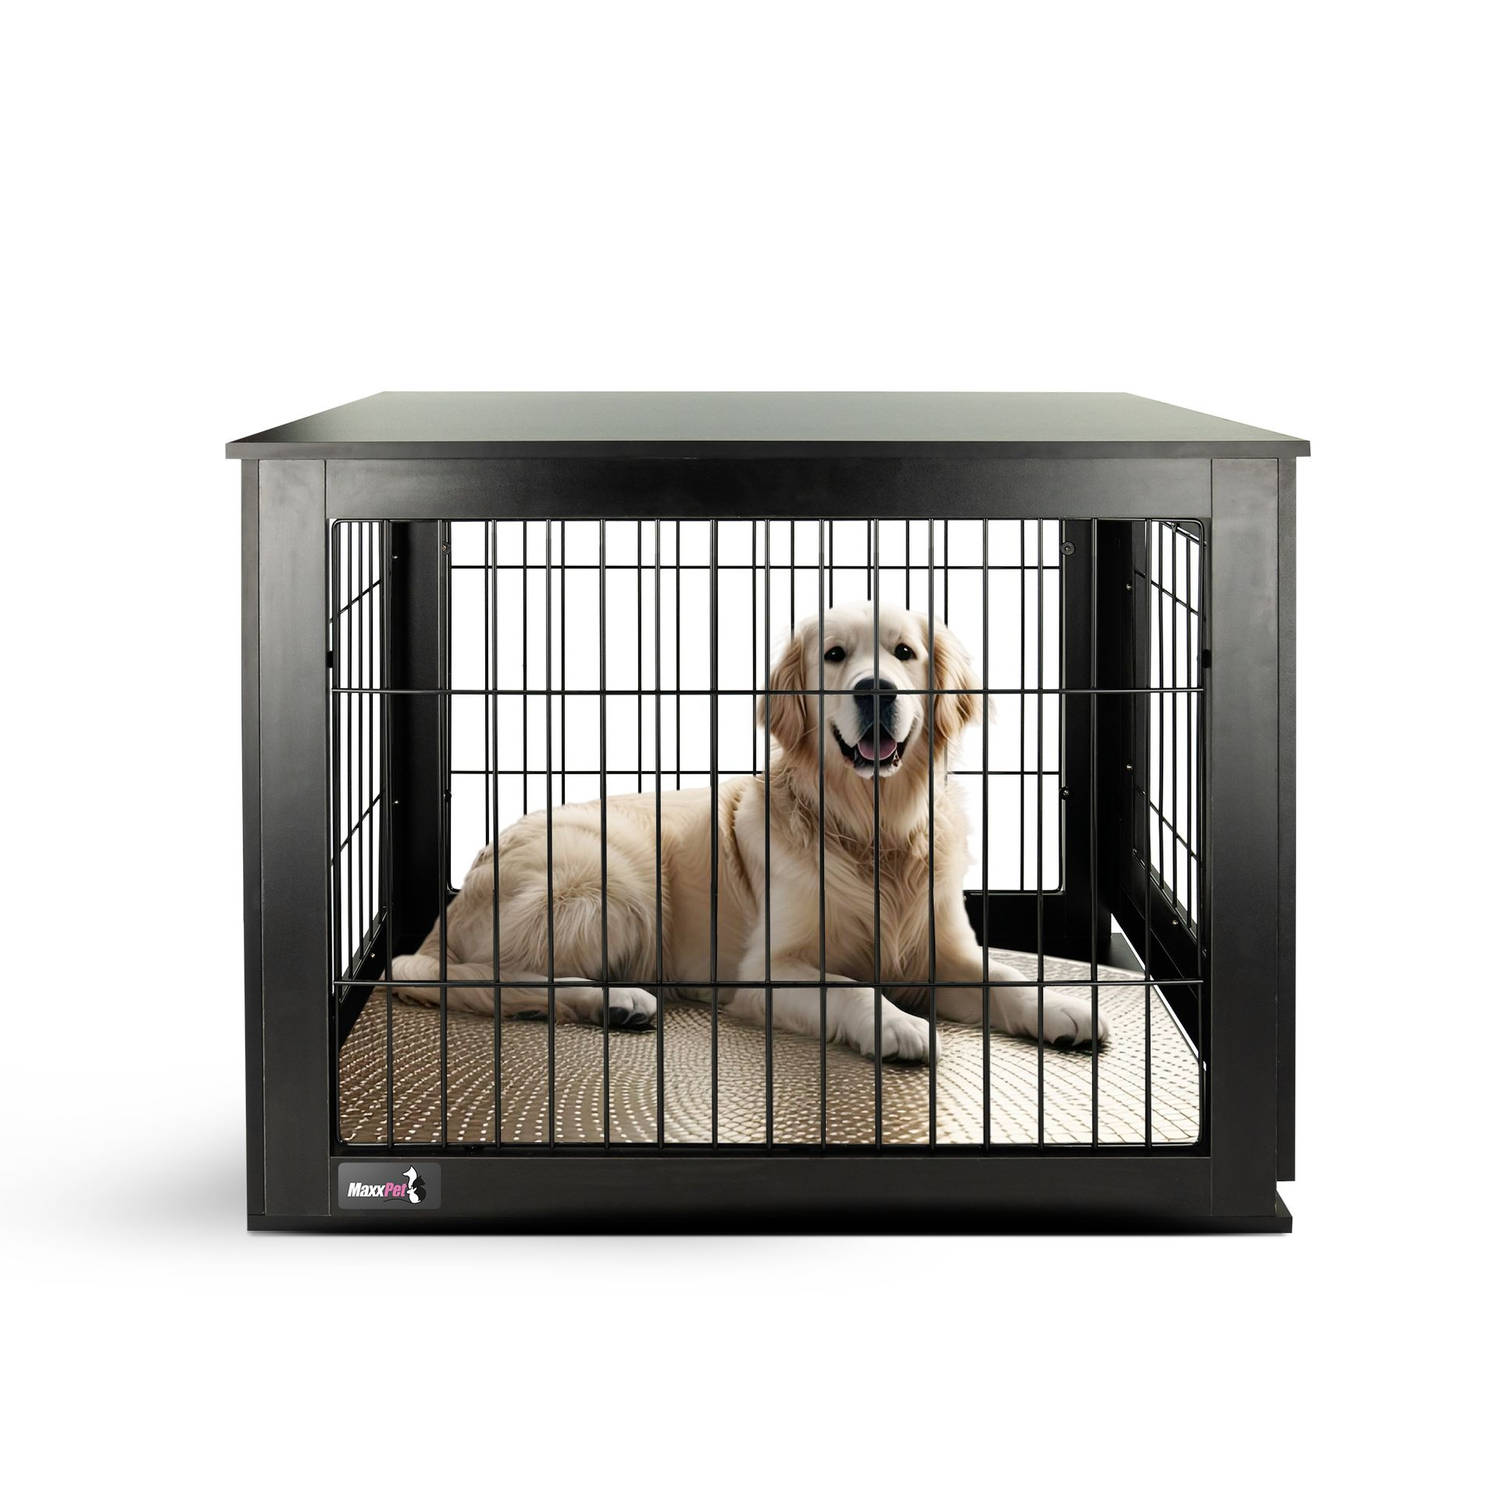 MaxxPet Houten Hondenbench - Hondenhuisje voor binnen - Hondenhok - kennel - 89x61x73cm